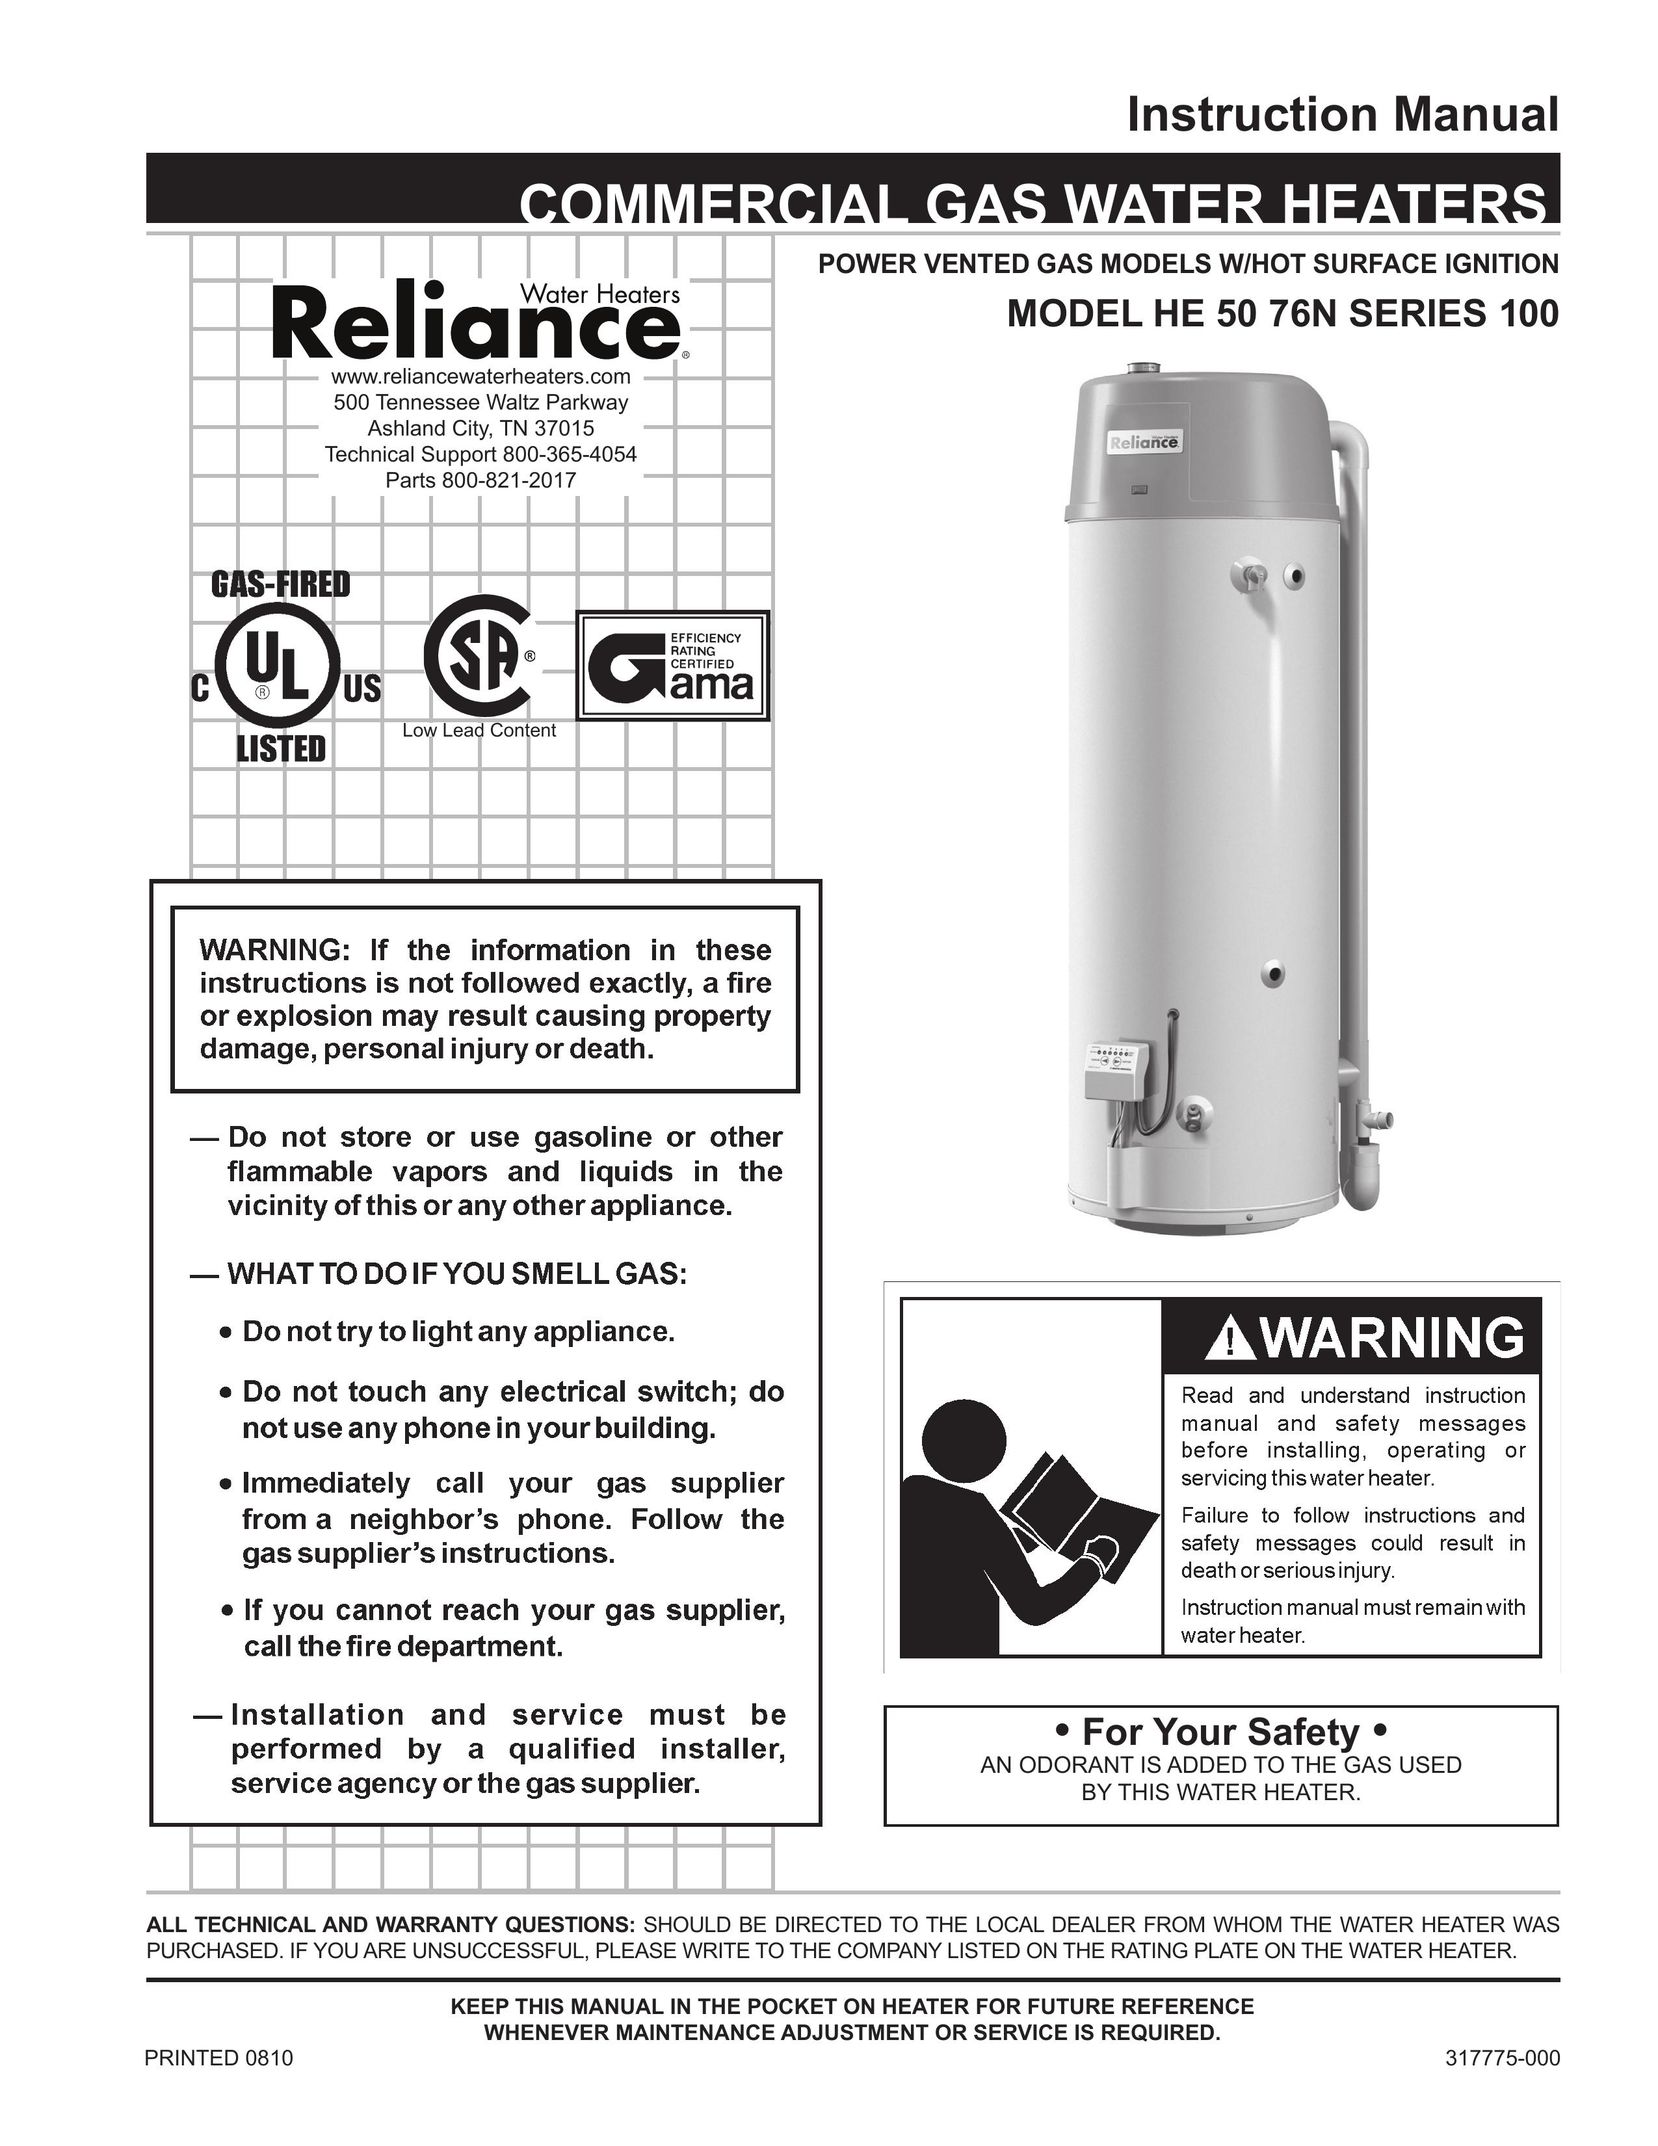 Reliance Water Heaters 317775-000 Water Heater User Manual